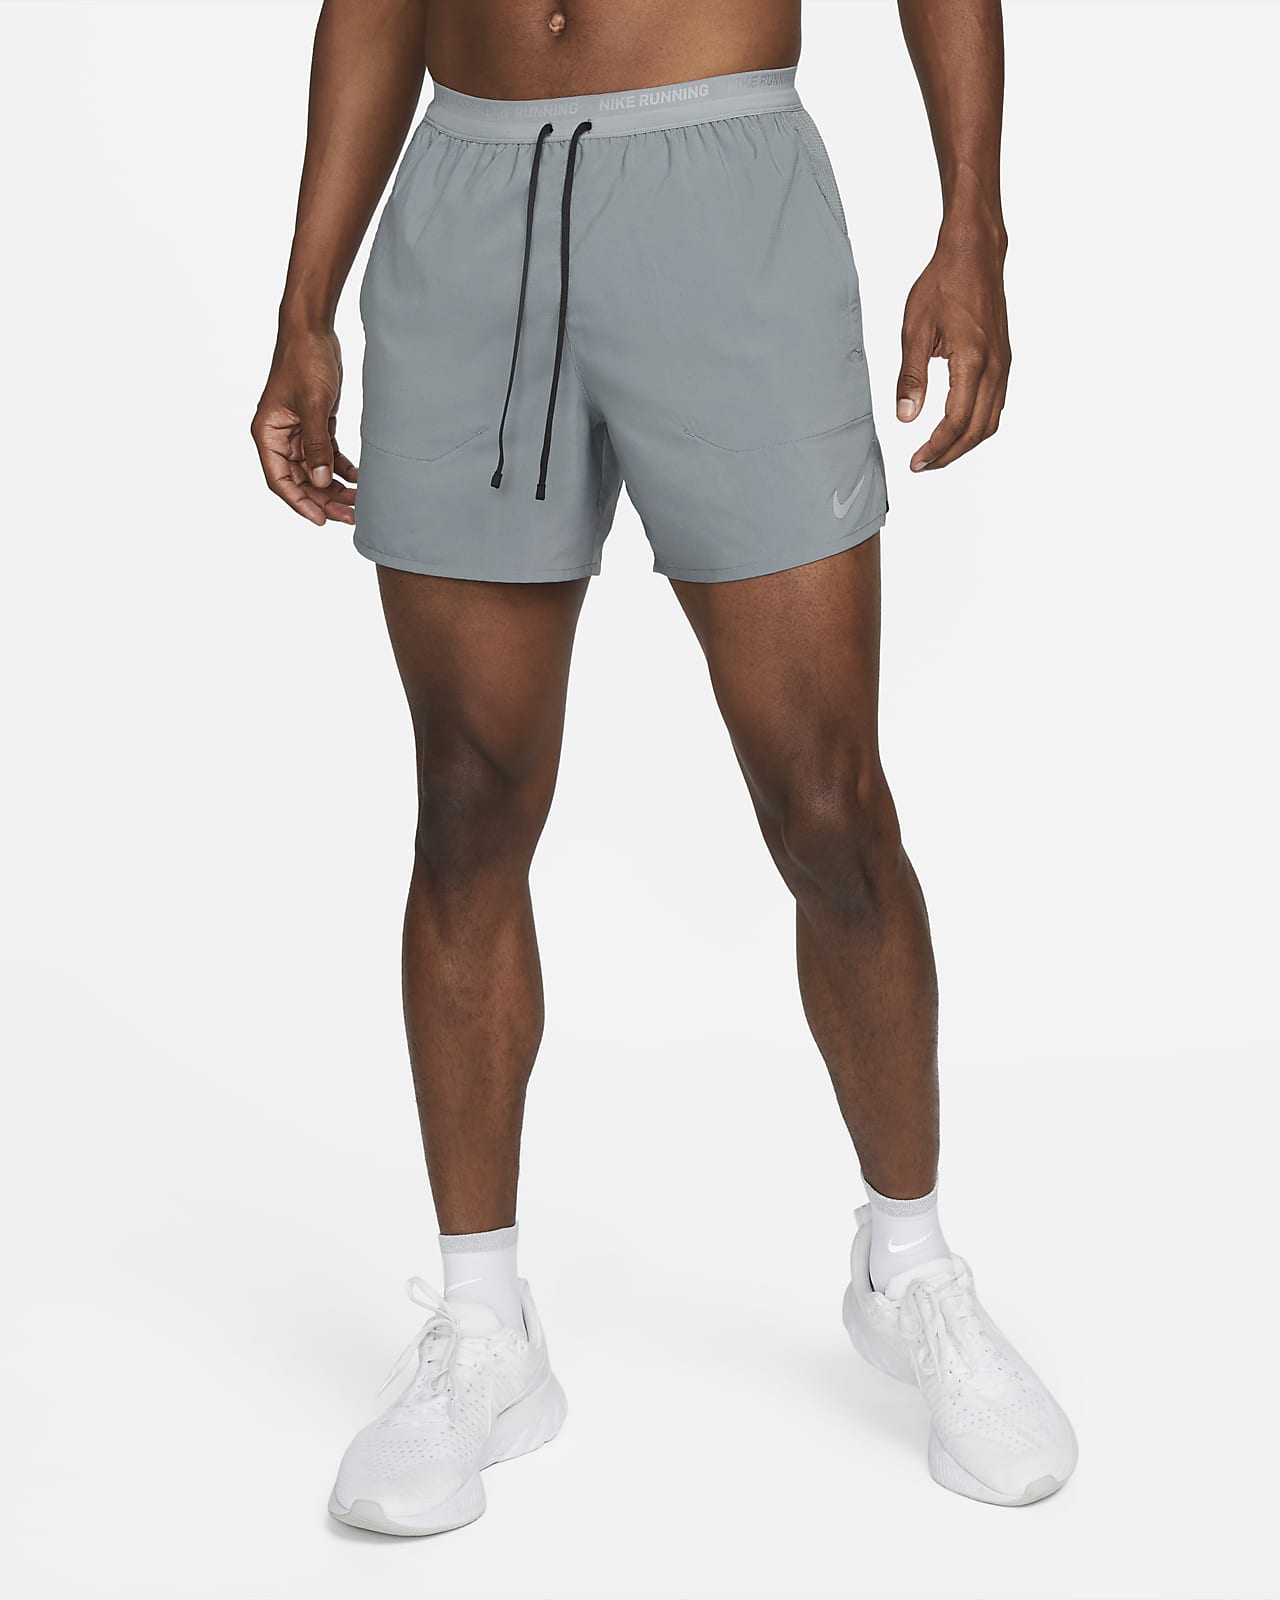 Shorts de running con forro de ropa interior Dri-FIT de 12.5 cm para hombre Nike Stride